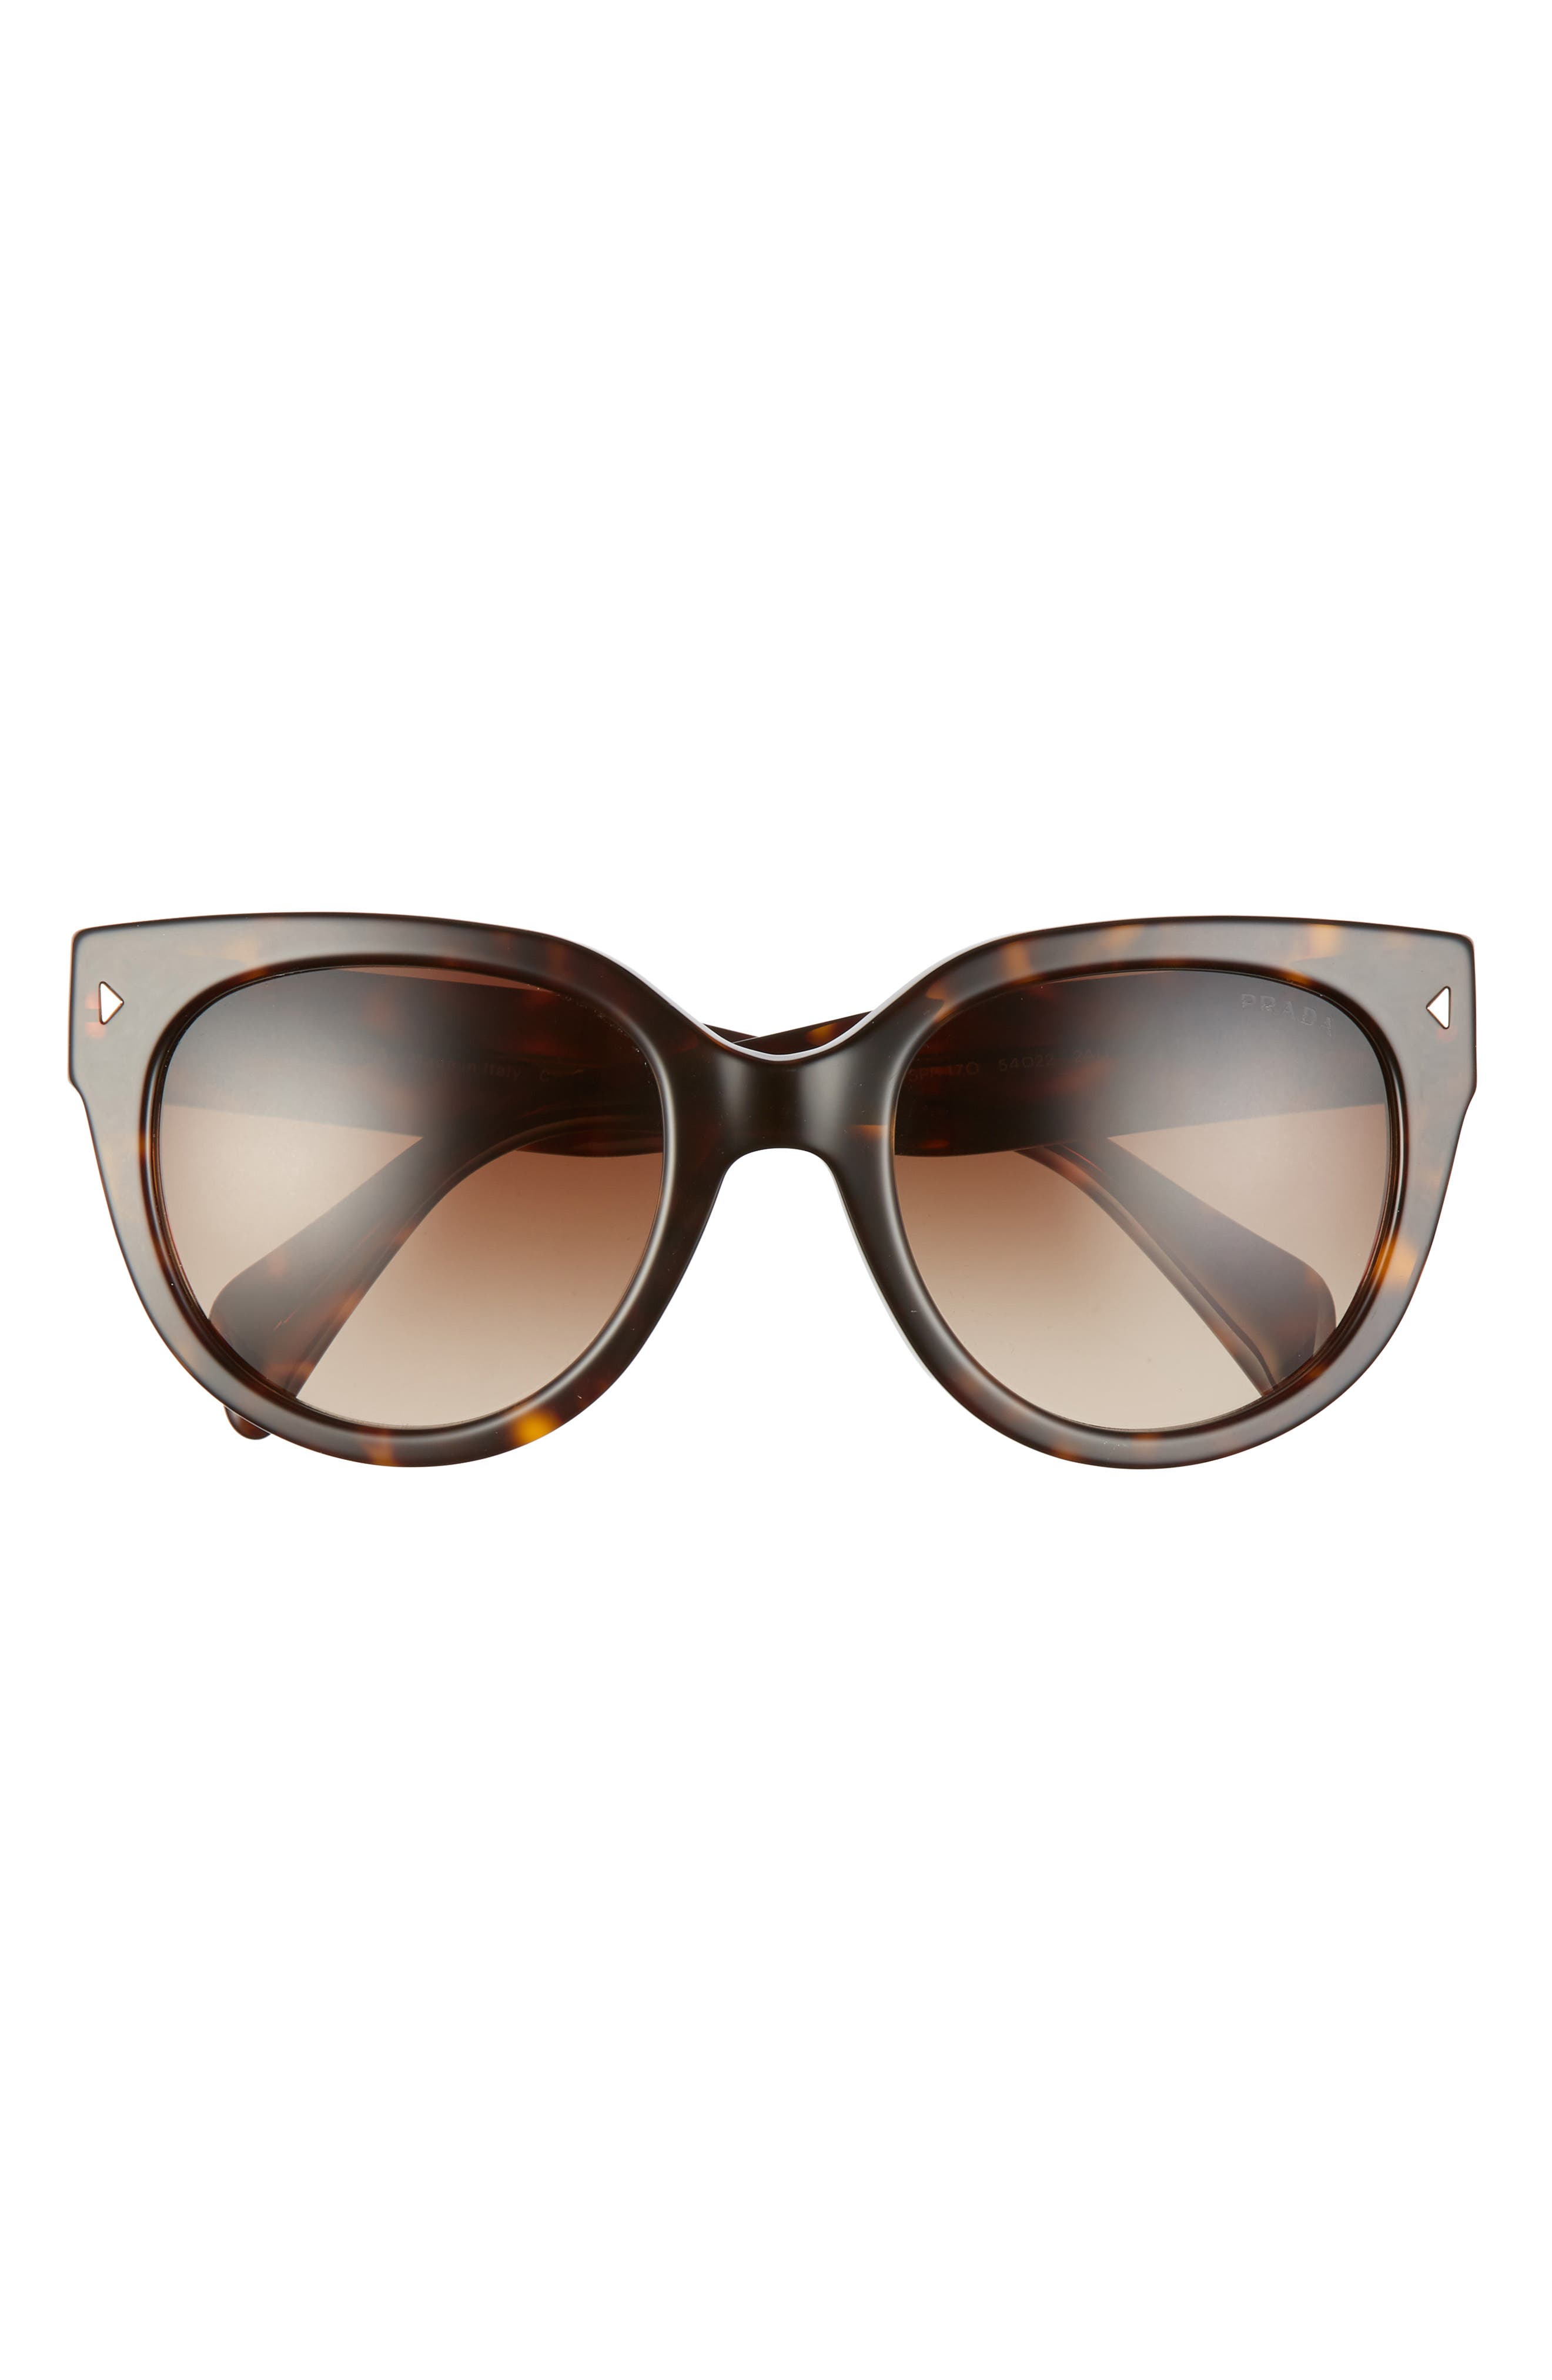 prada phantos 54mm gradient cat eye sunglasses nordstrom rack